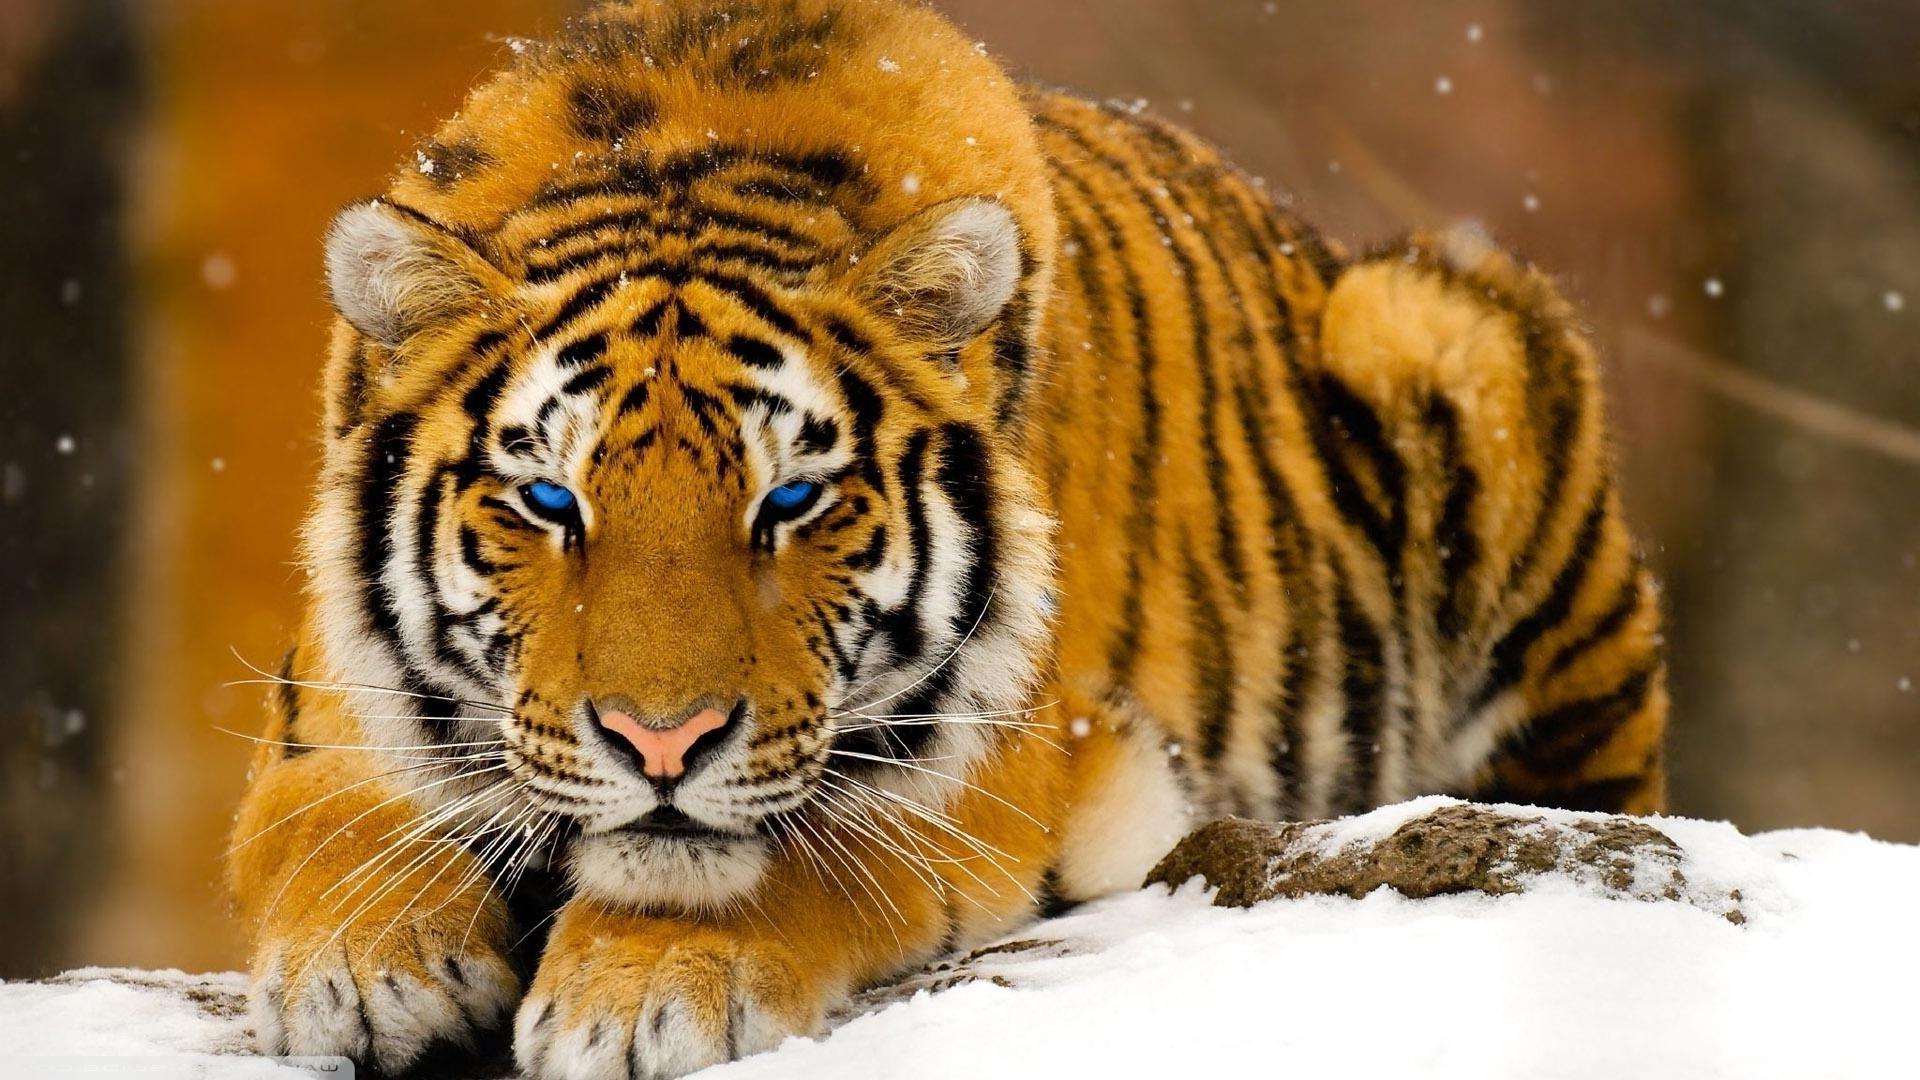 Tiger In Snow HD Wallpaperx1080